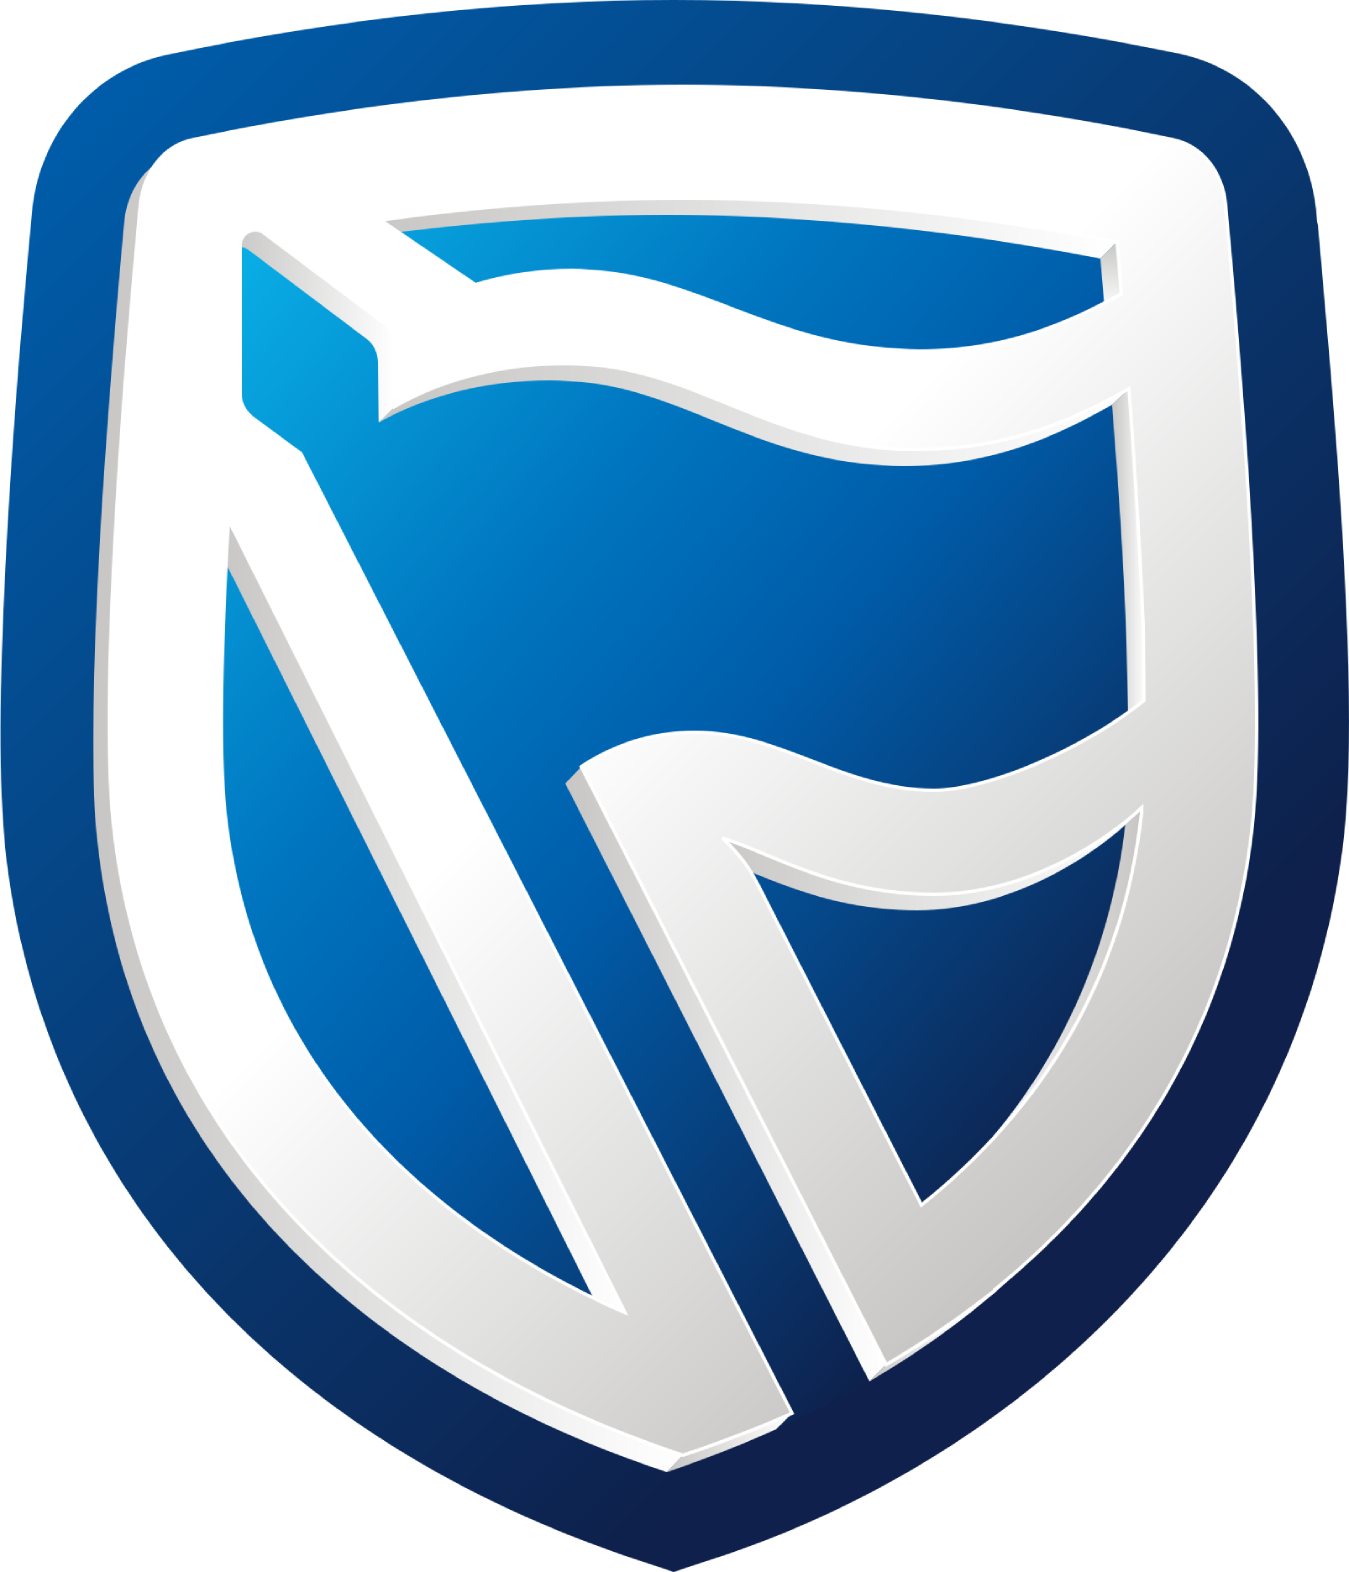 Standard Bank Group logo (transparent PNG)